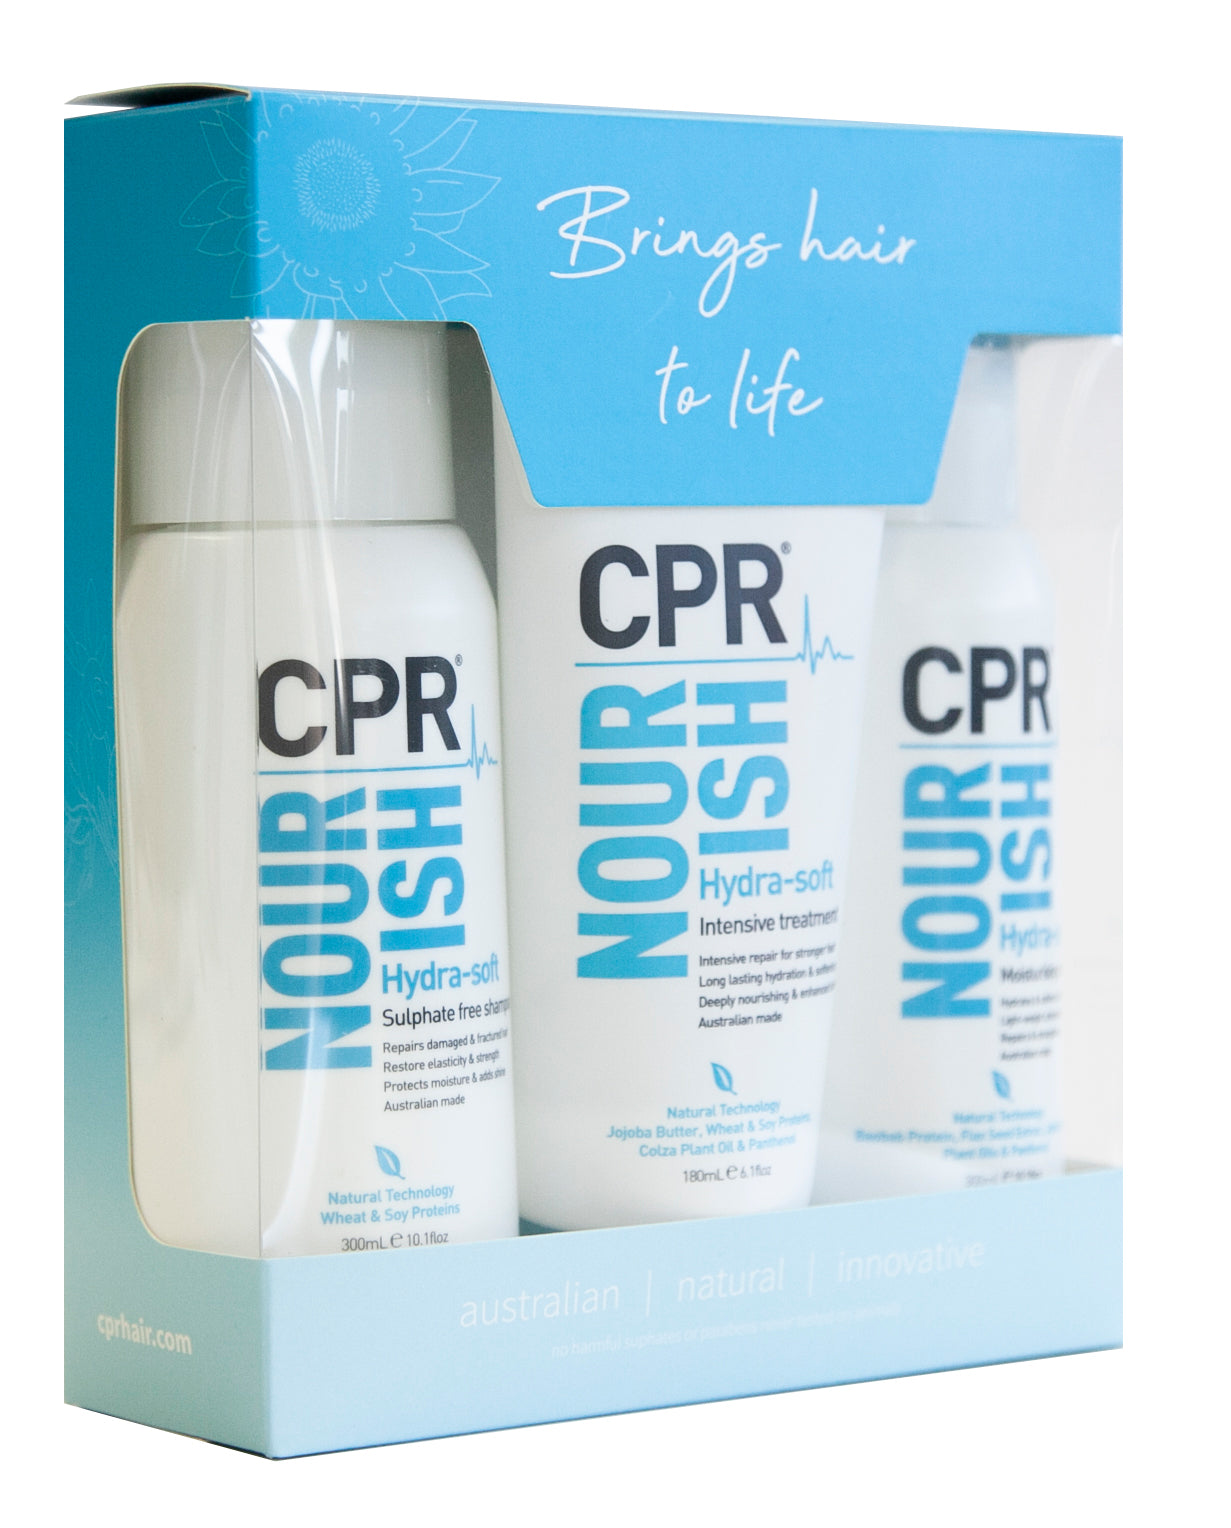 CPR Vitafive Nourish Trio Gift Pack - Beautopia Hair & Beauty